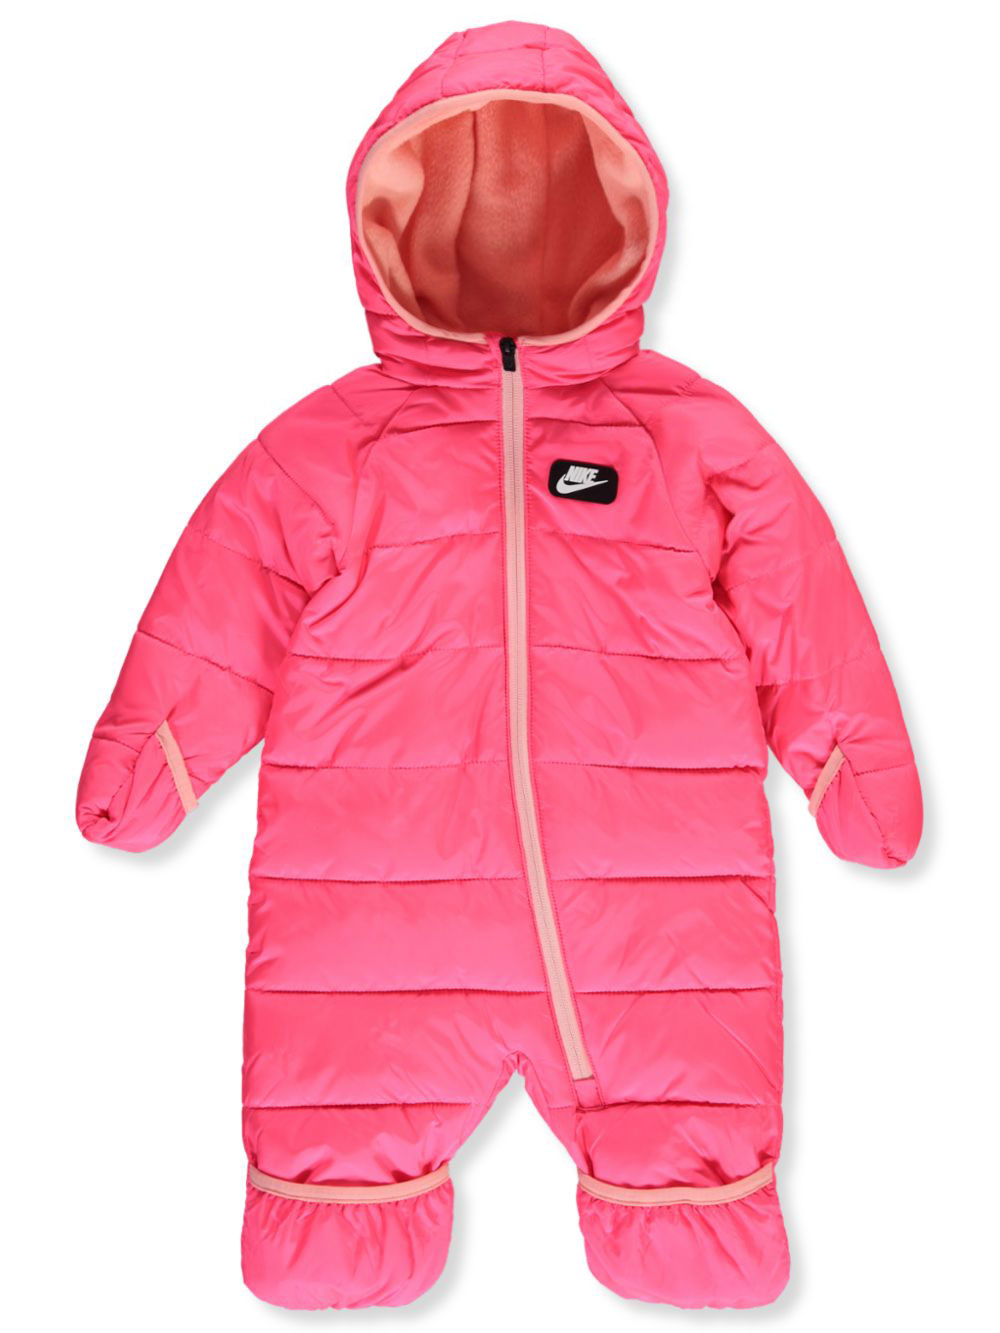 nike infant winter coat